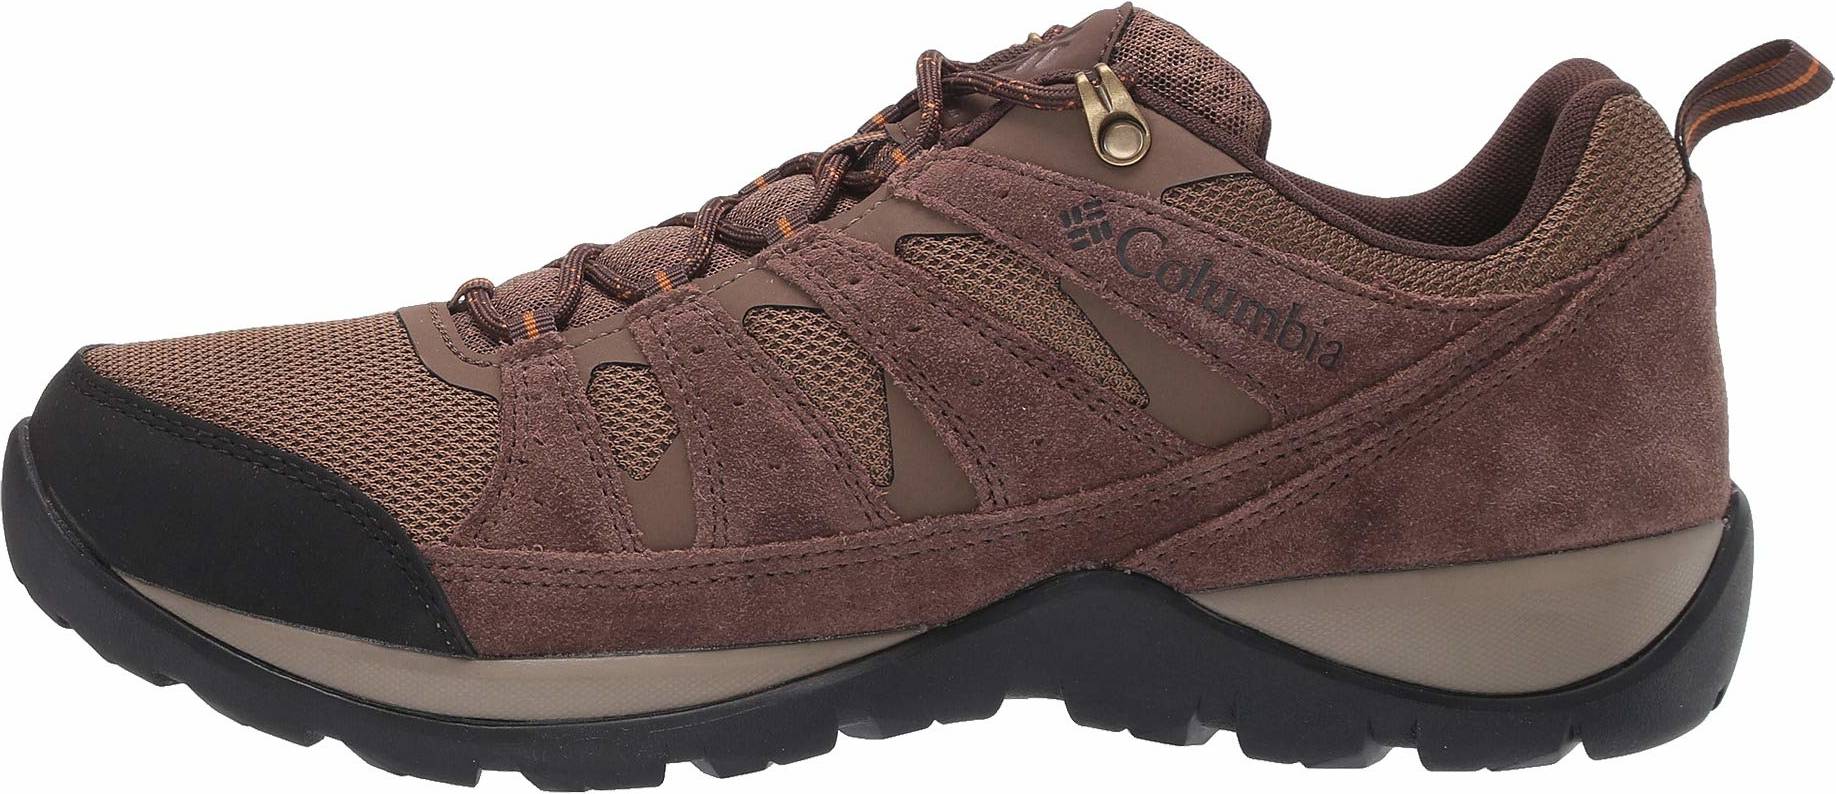 columbia redmond hiking shoe